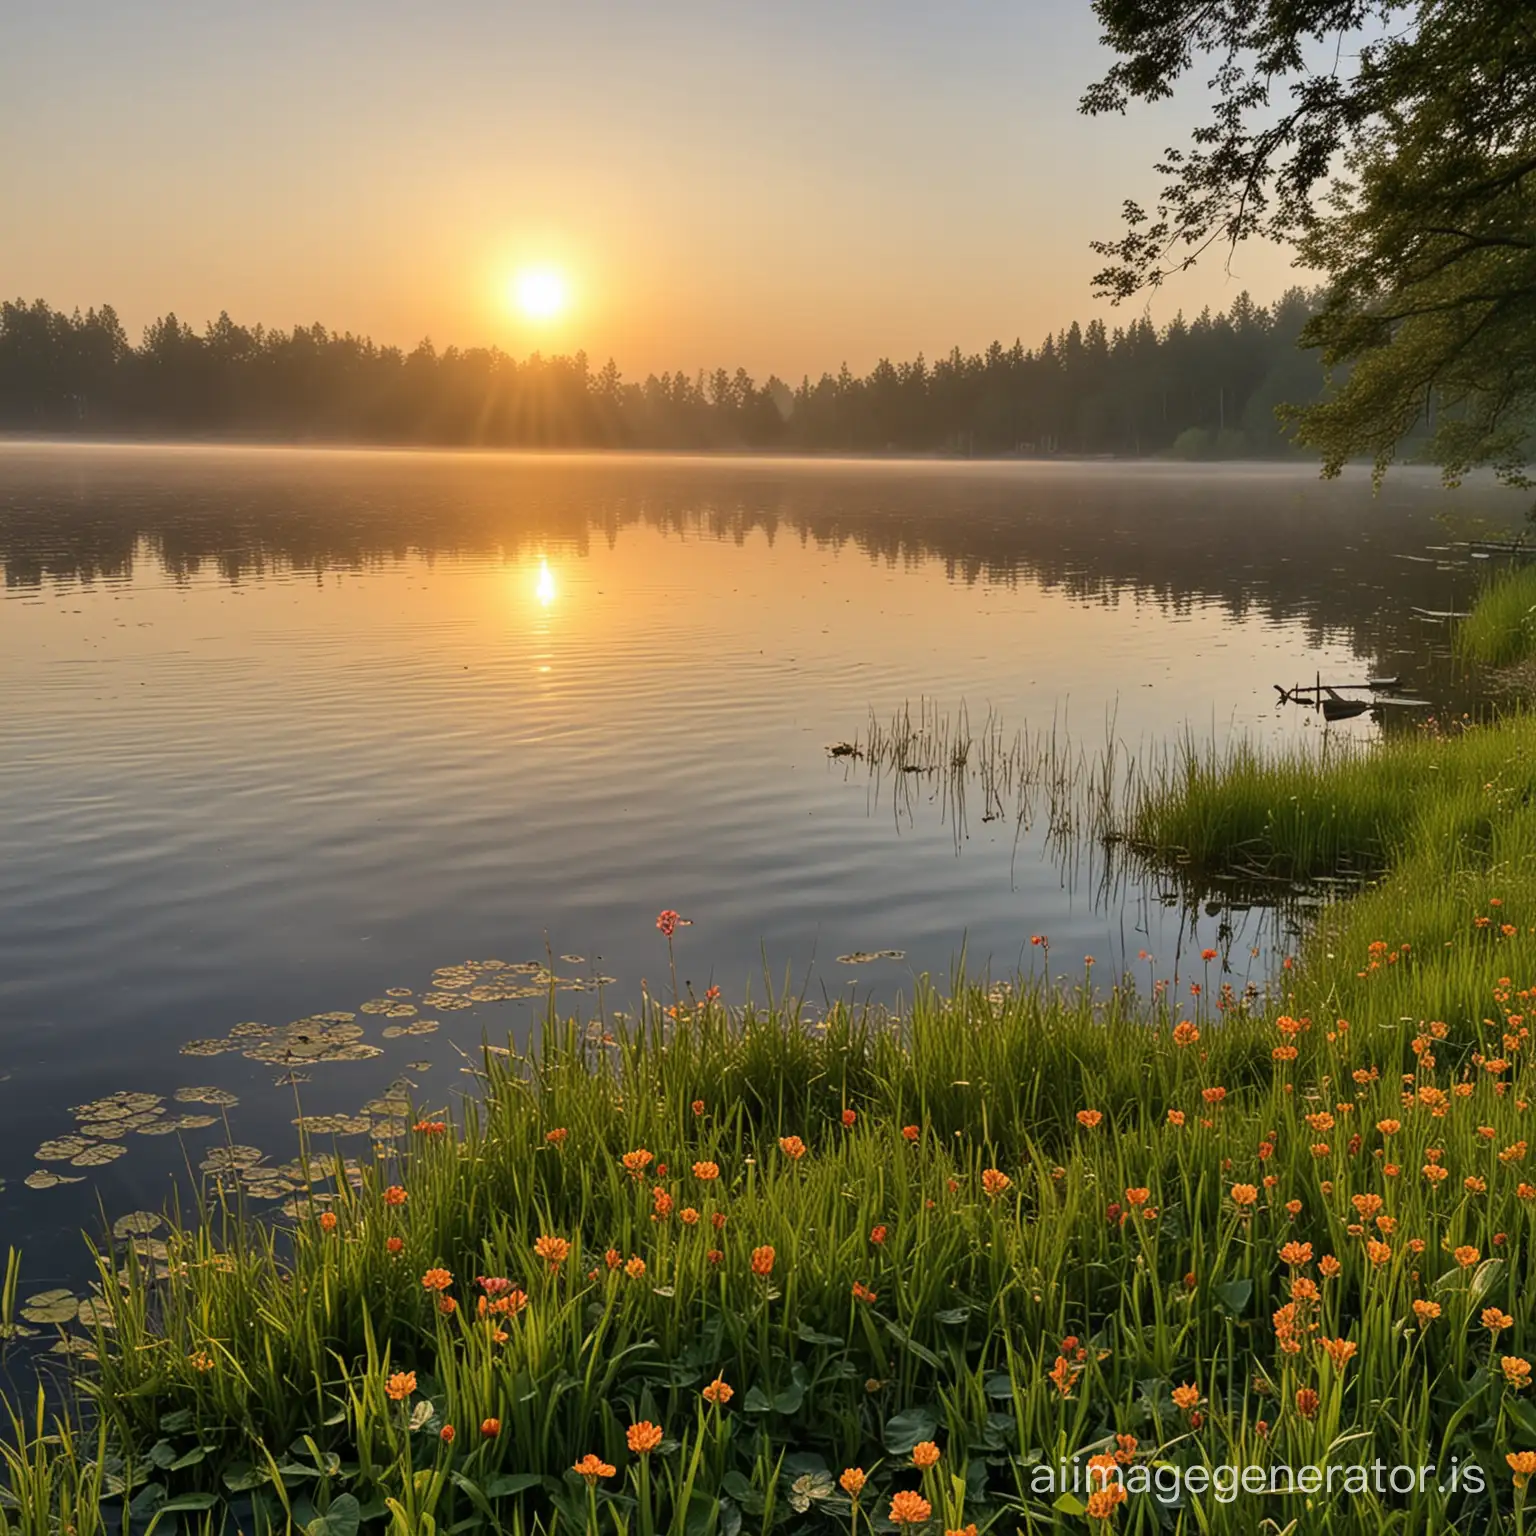 Serene-Morning-Sunrise-Over-a-Vast-Lake-with-Lush-Green-Surroundings